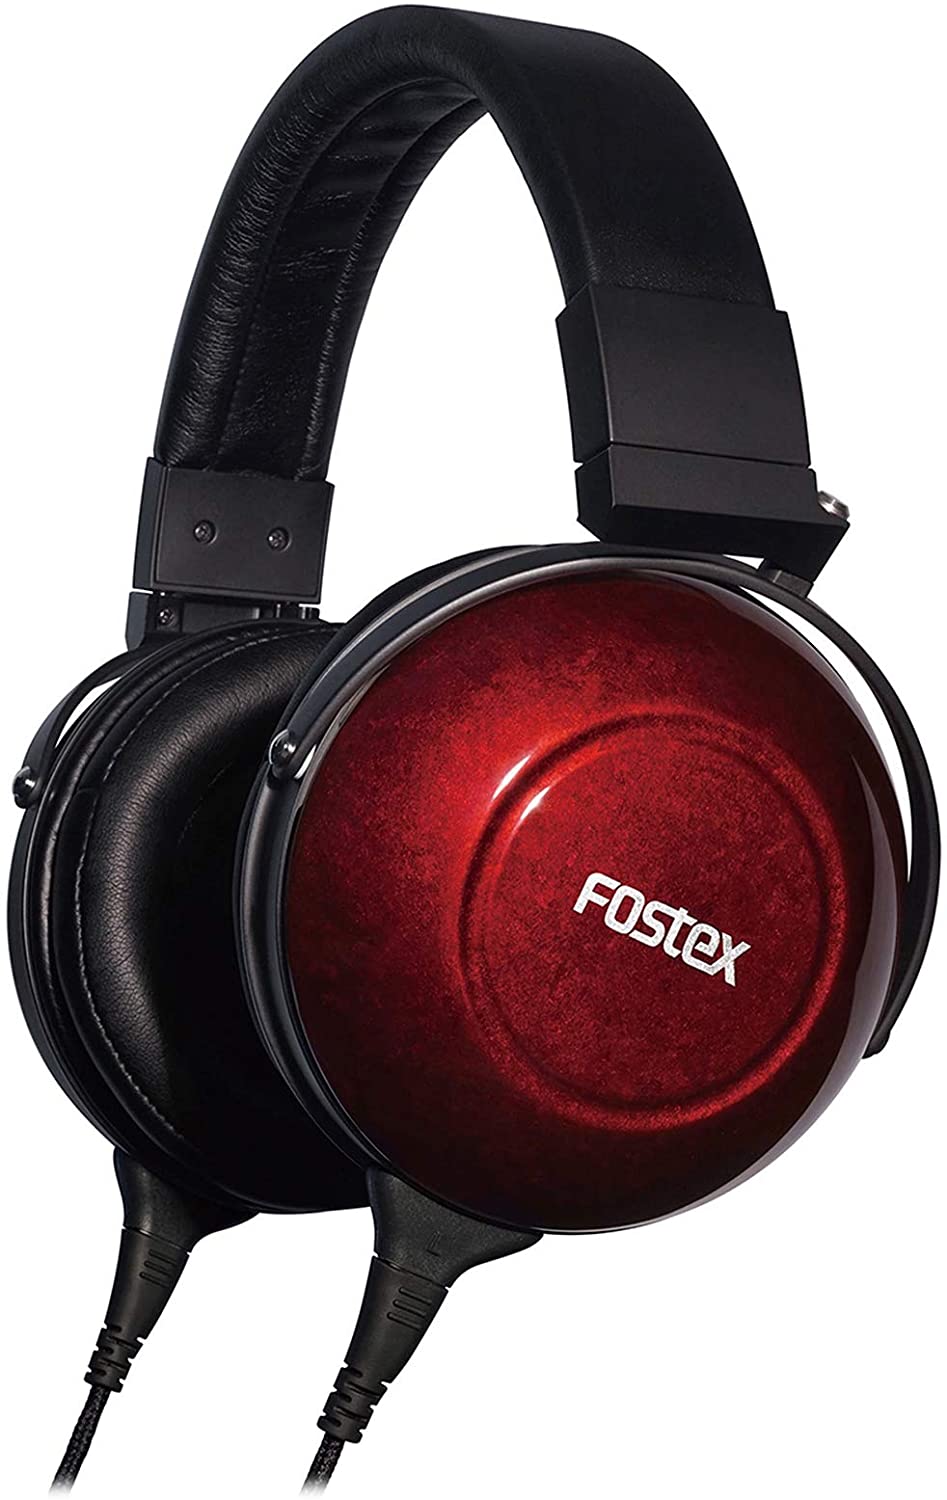 2. Fostex TH-900mk2 Premium 1.5 Tesla Stereo Headphones at Amazon